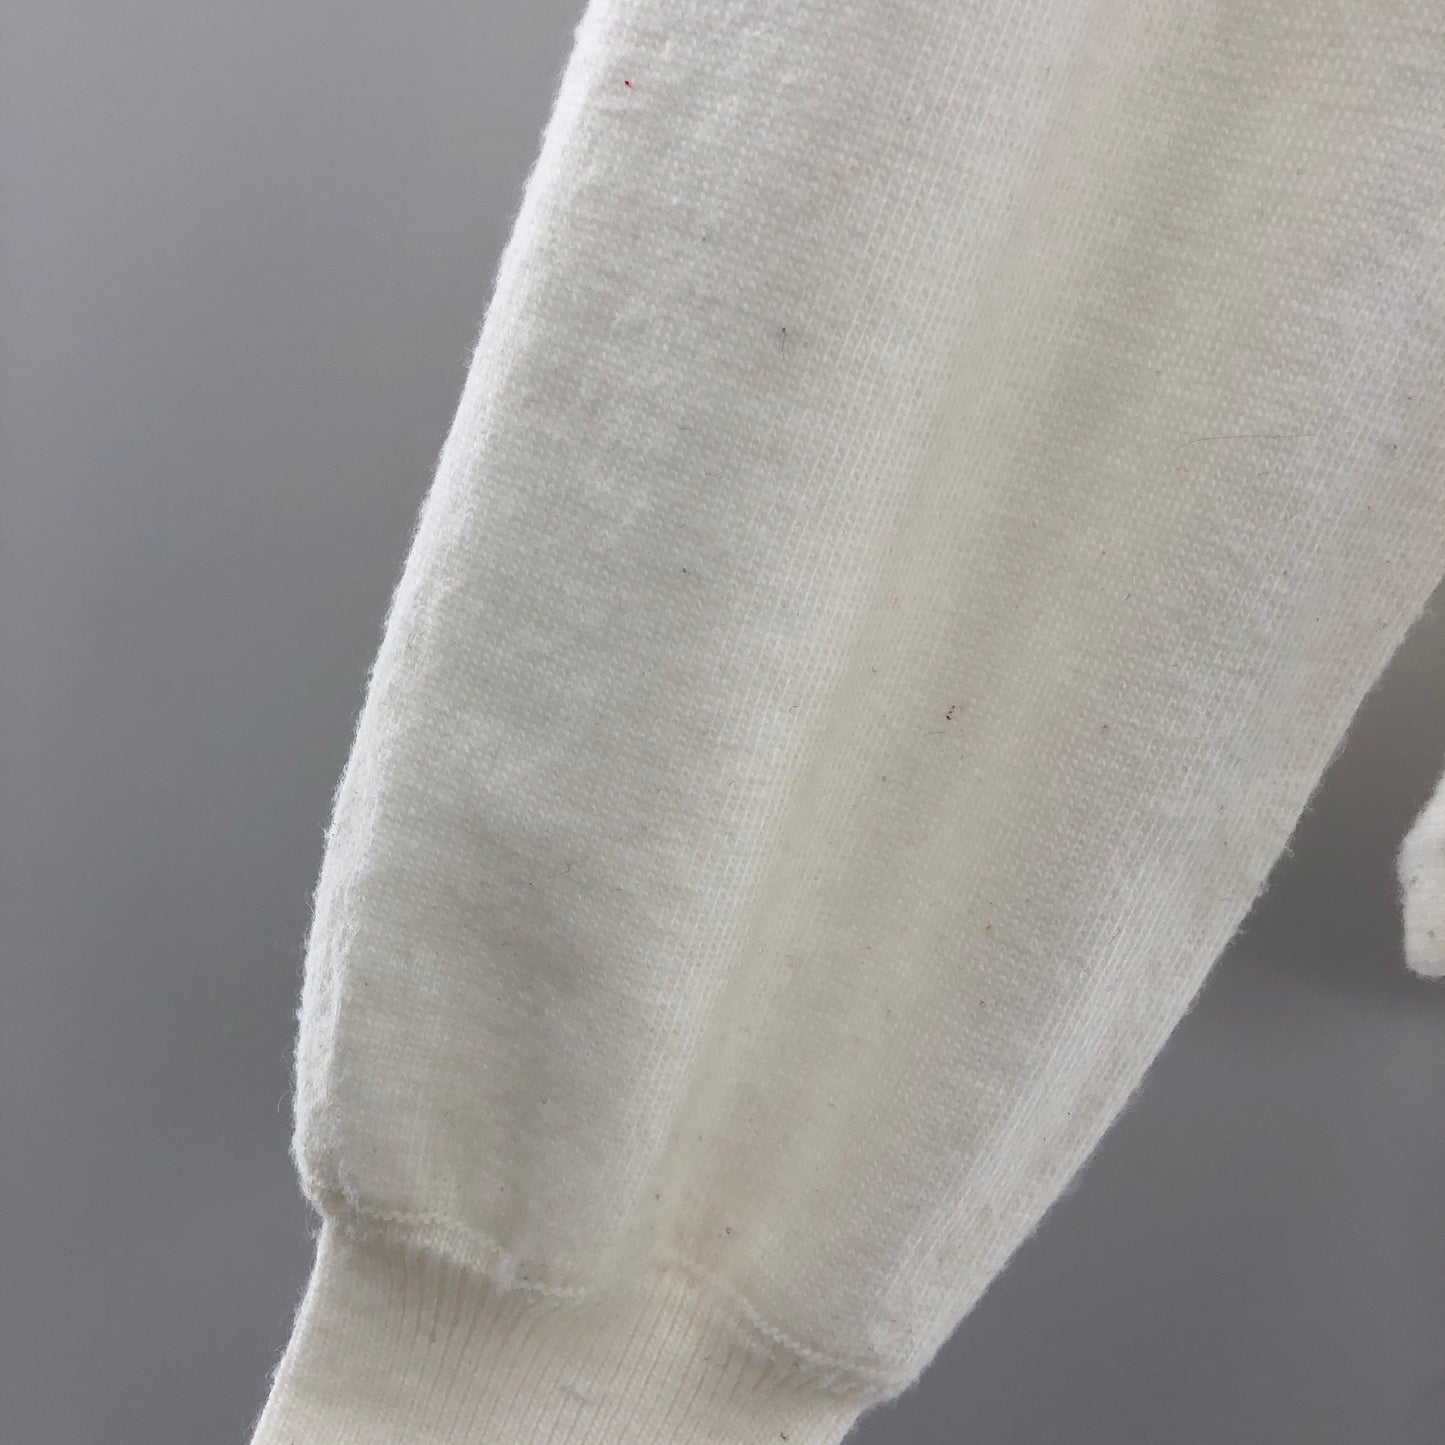 LPA Ayla Lightweight knit fabric Top in Ivory XS